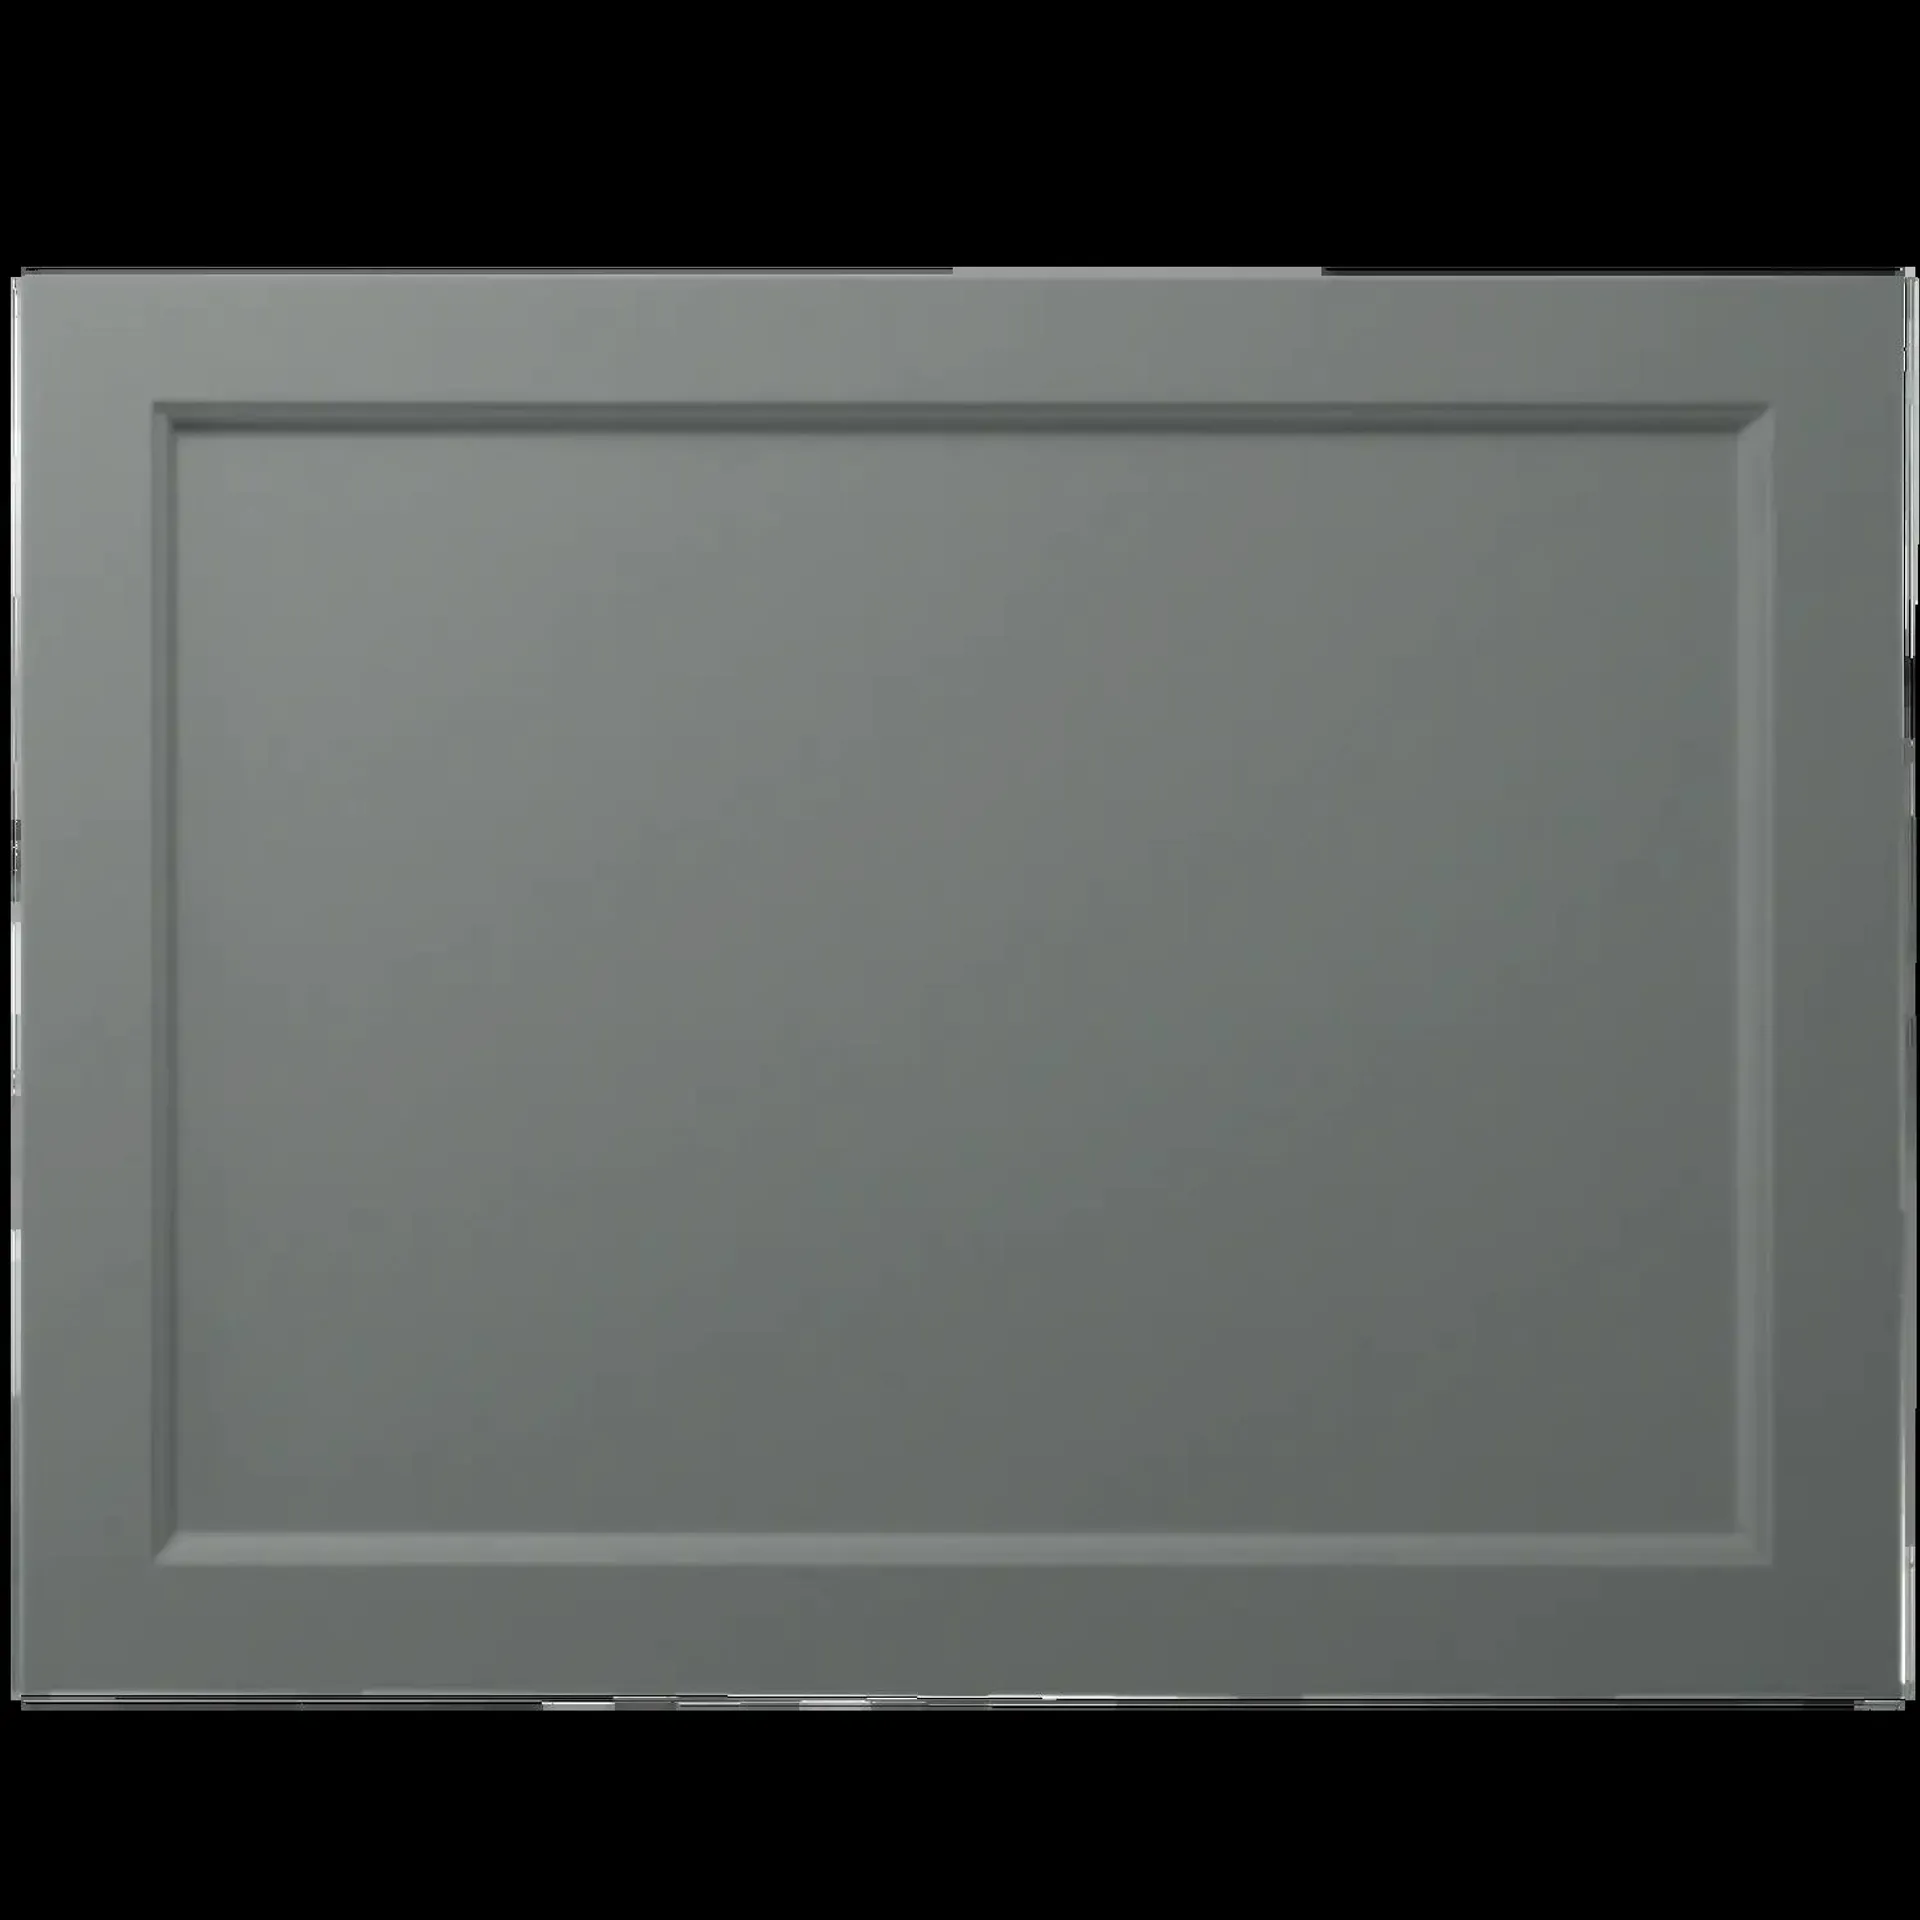 Savoy Bath End Panel 700mm - Charcoal Grey